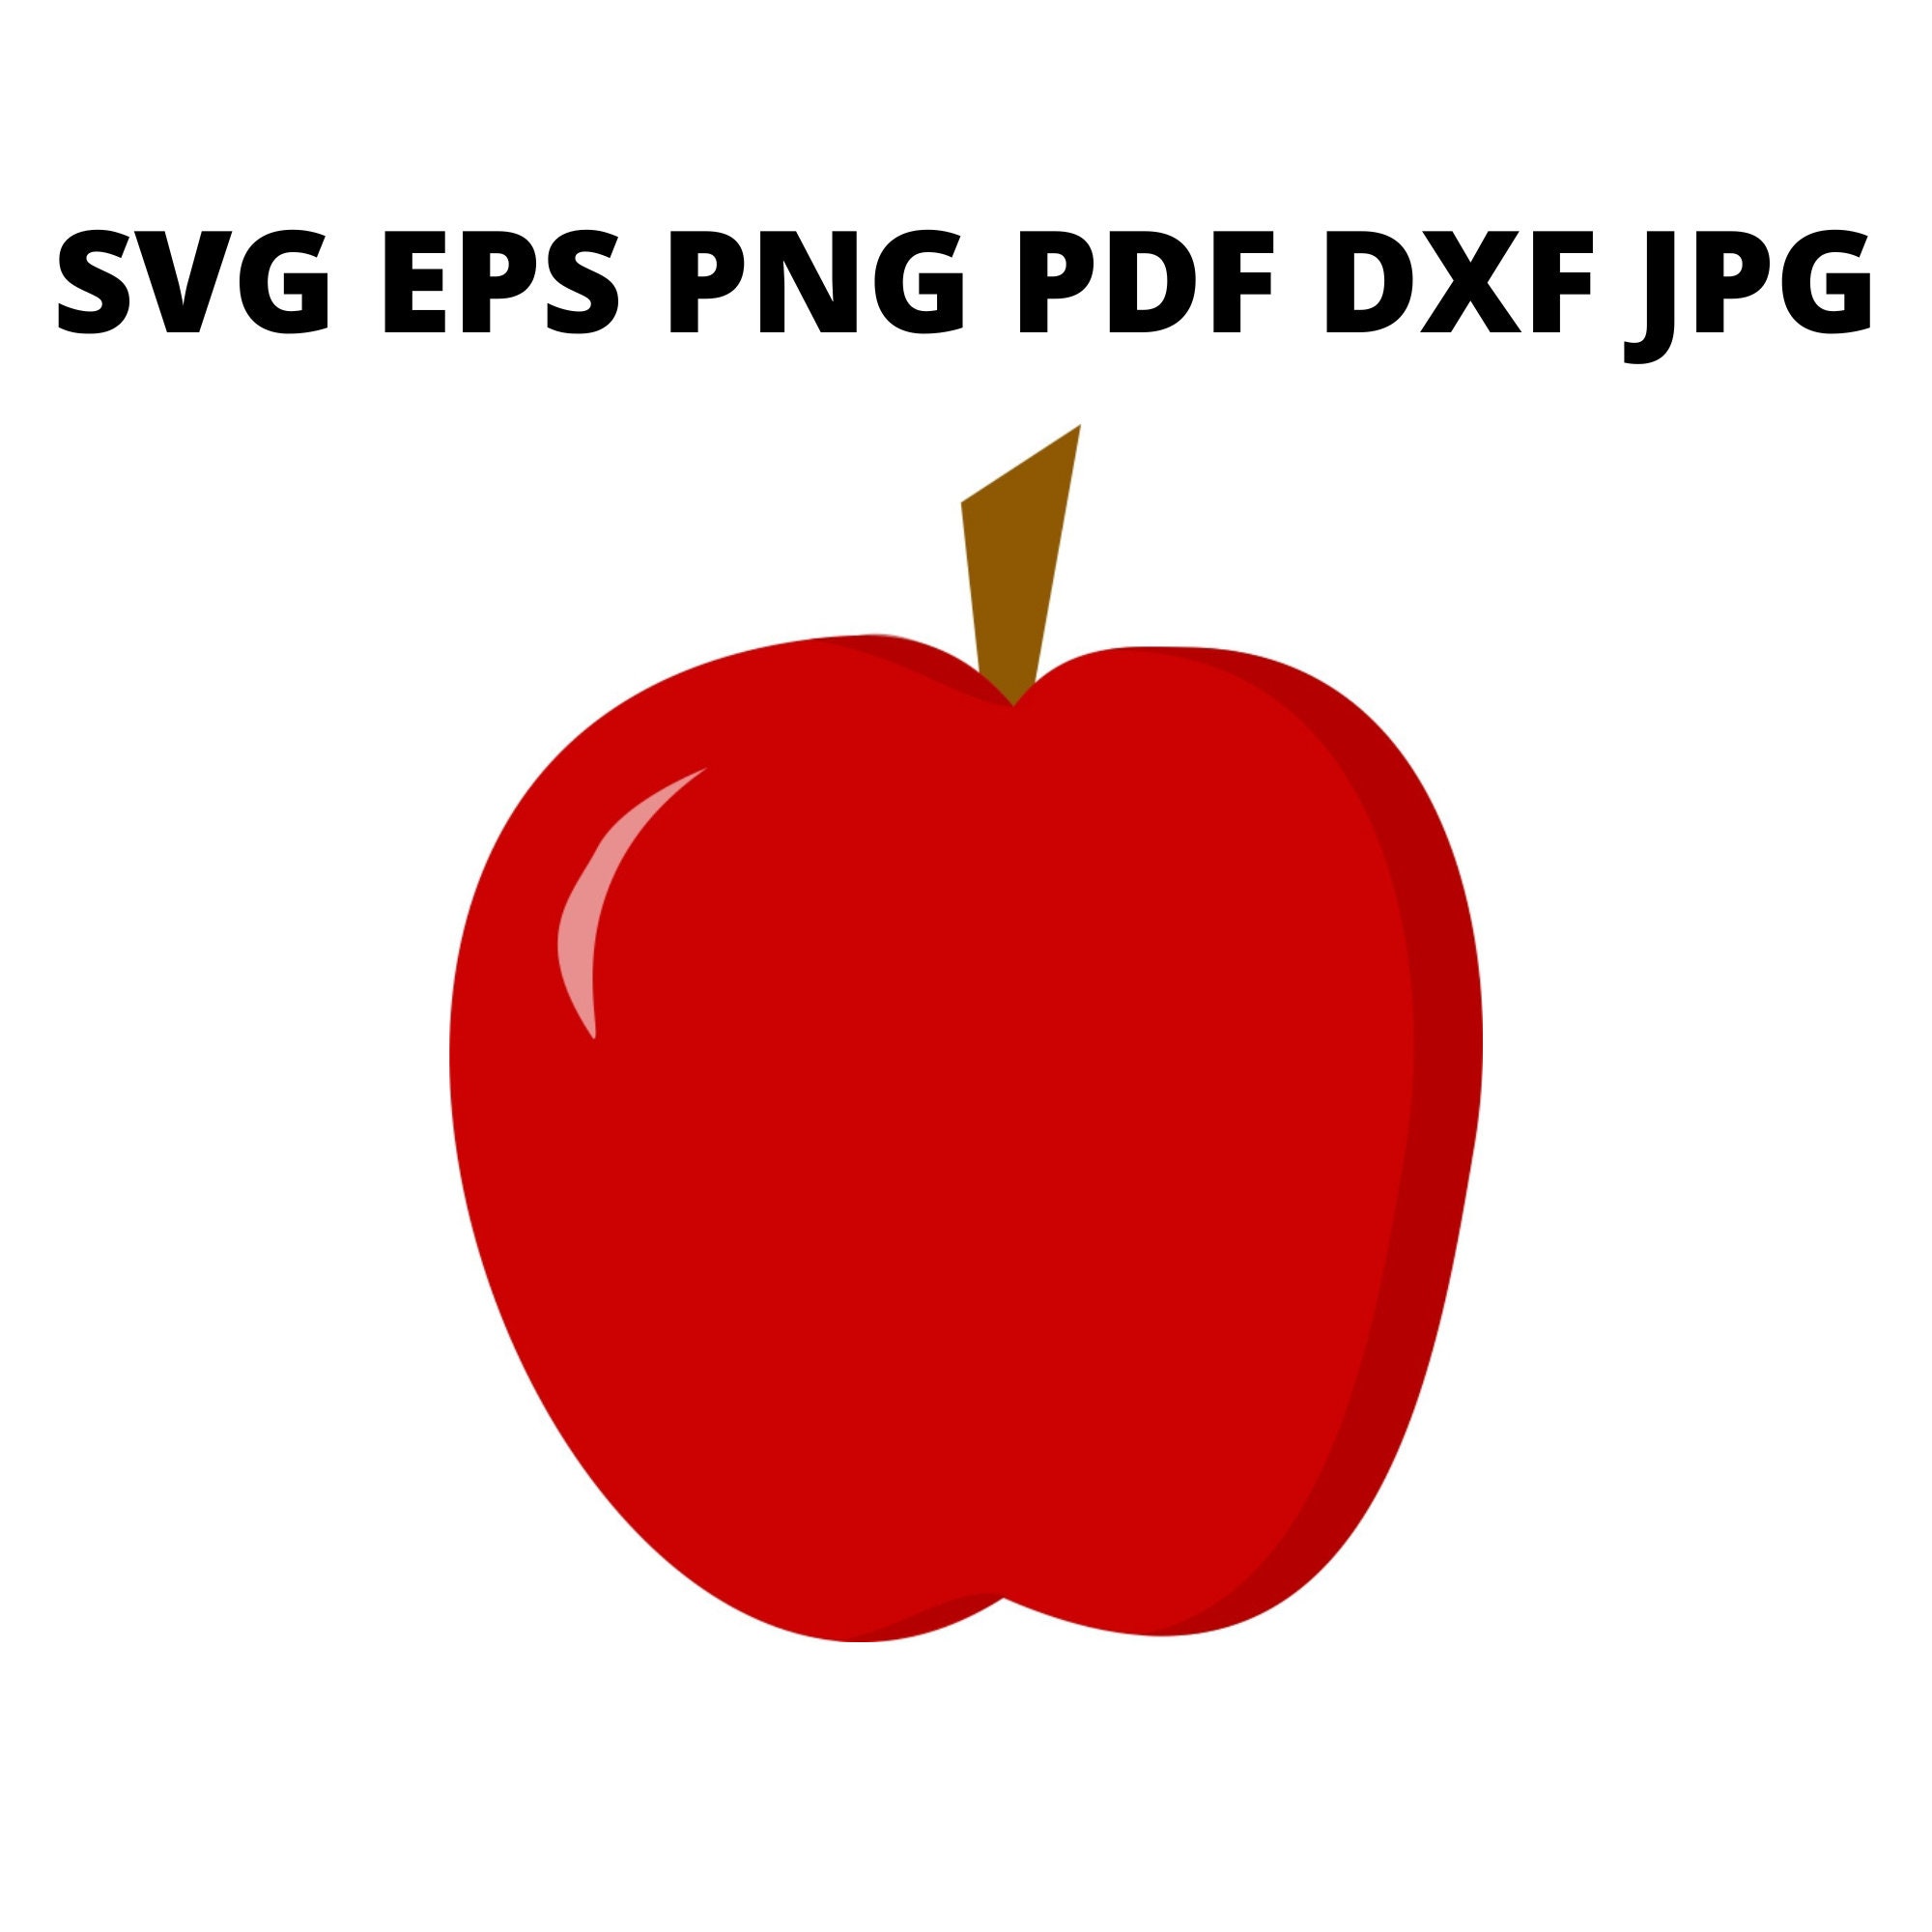 Red Apple Svg, Fruit Svg, Apple Monogram Svg, Apple Png, Apple Vector,  Apple Clip Art. Cut File for Cricut, Silhouette, Pdf Png Eps Dxf. 